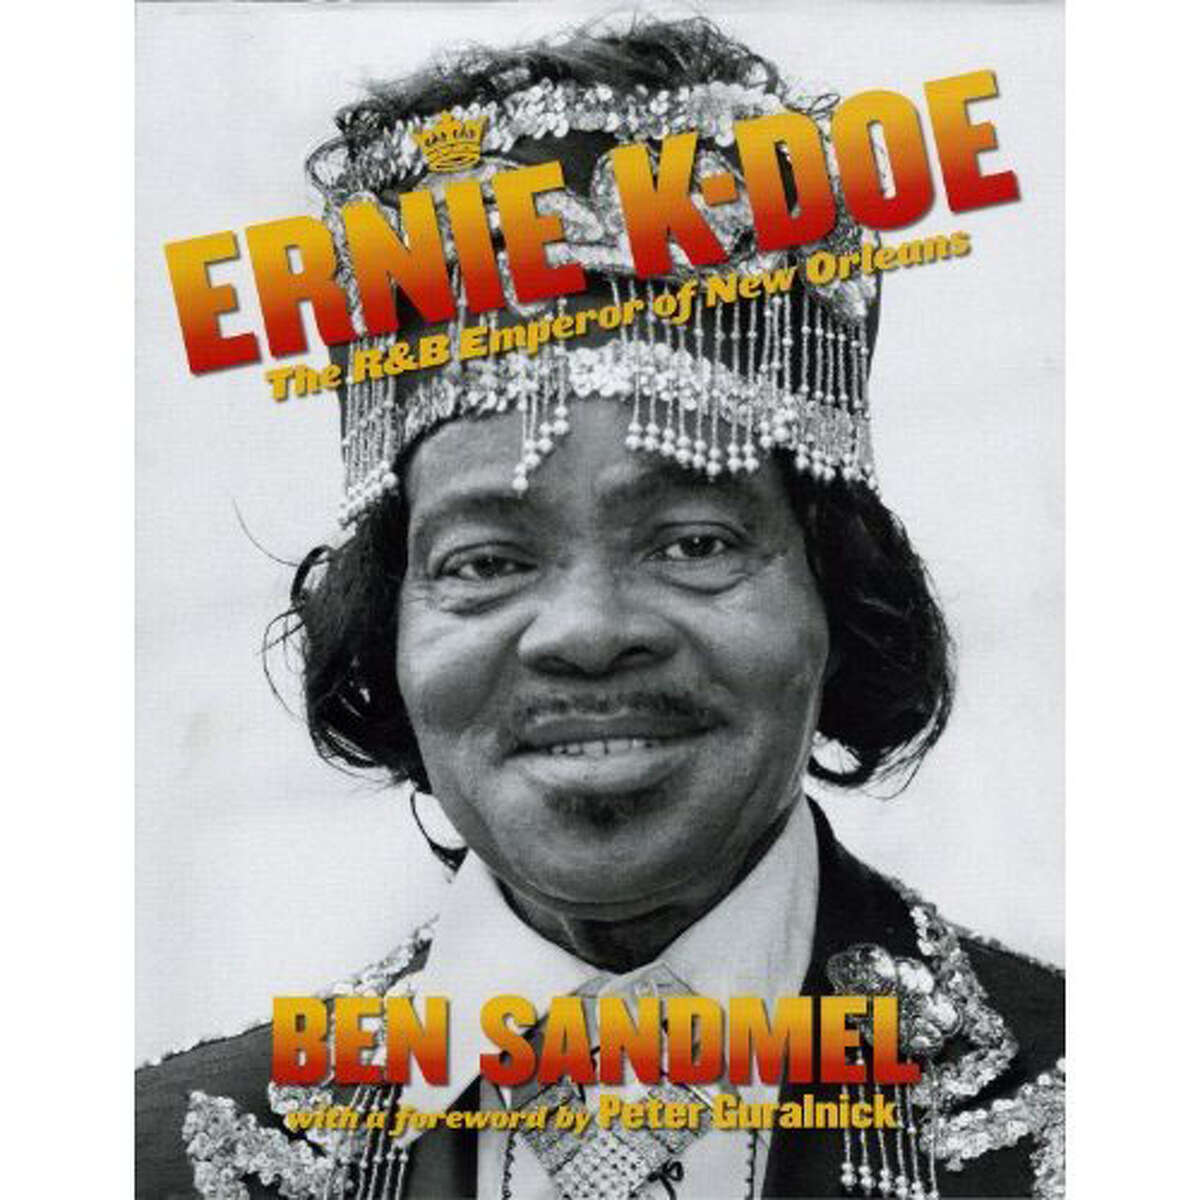 "Ernie K-Doe: The R&B Emperor of New Orleans" by Ben Sandmel